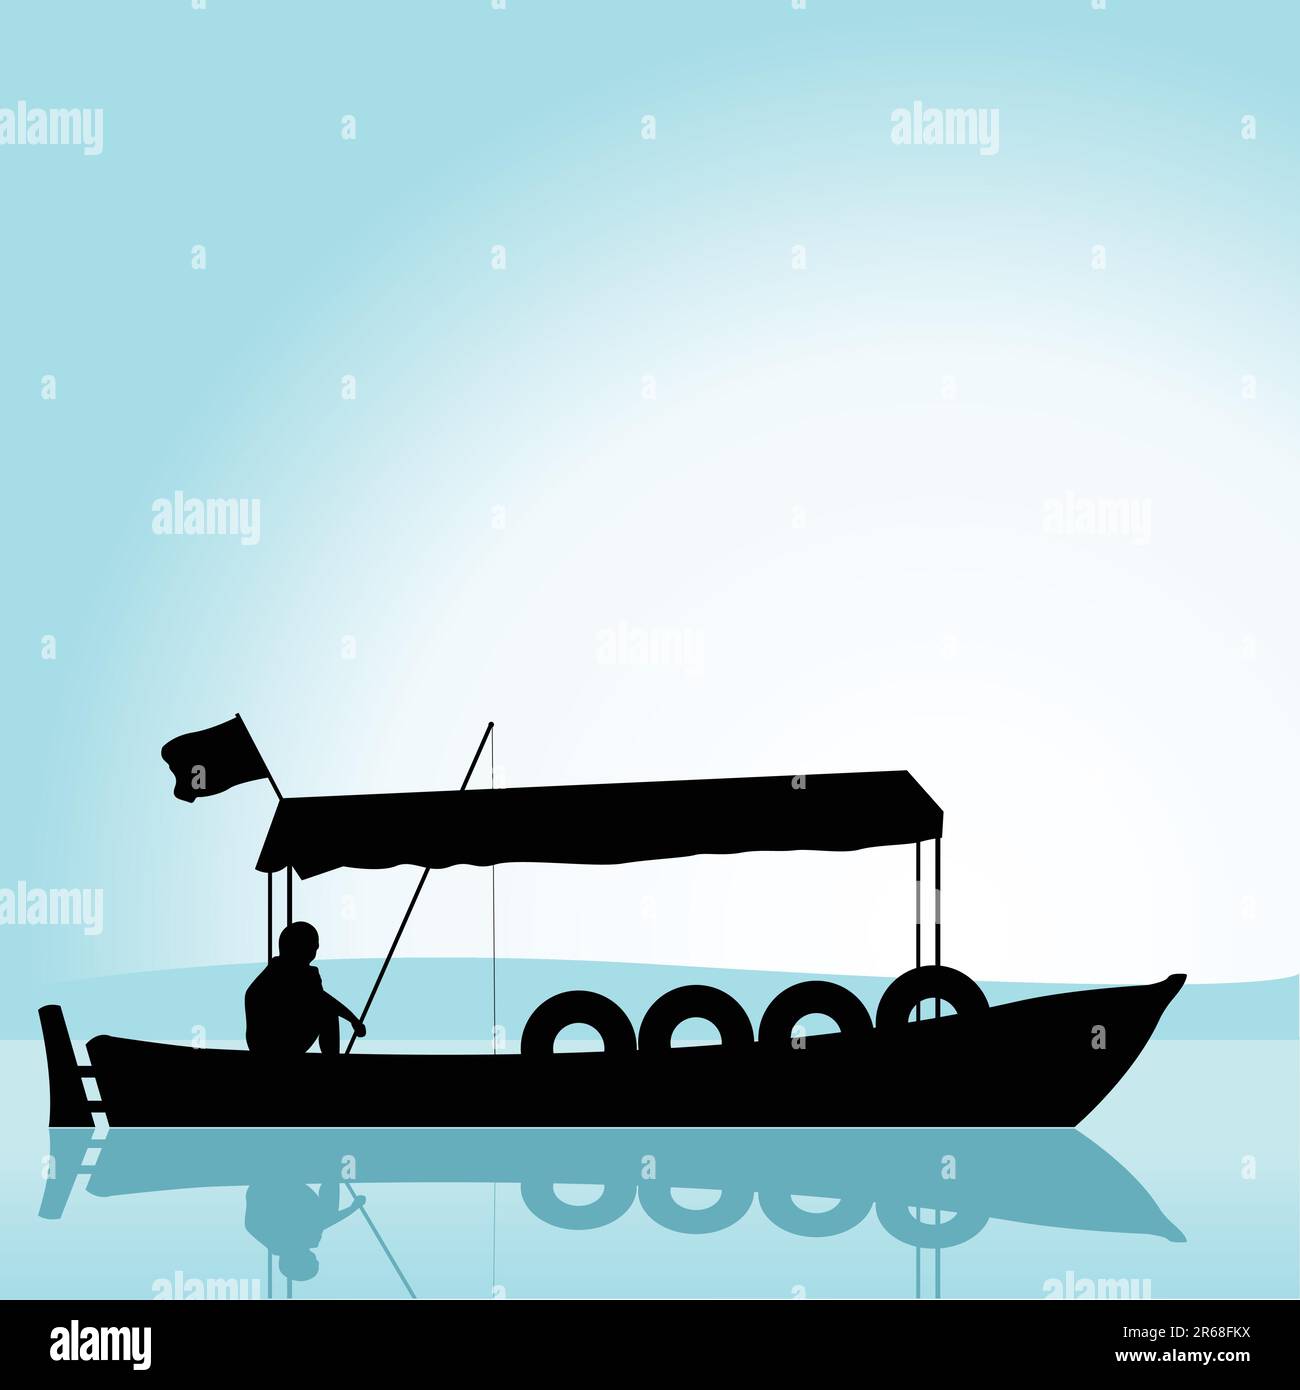 vector illustration of a fishing boat Stock Vector